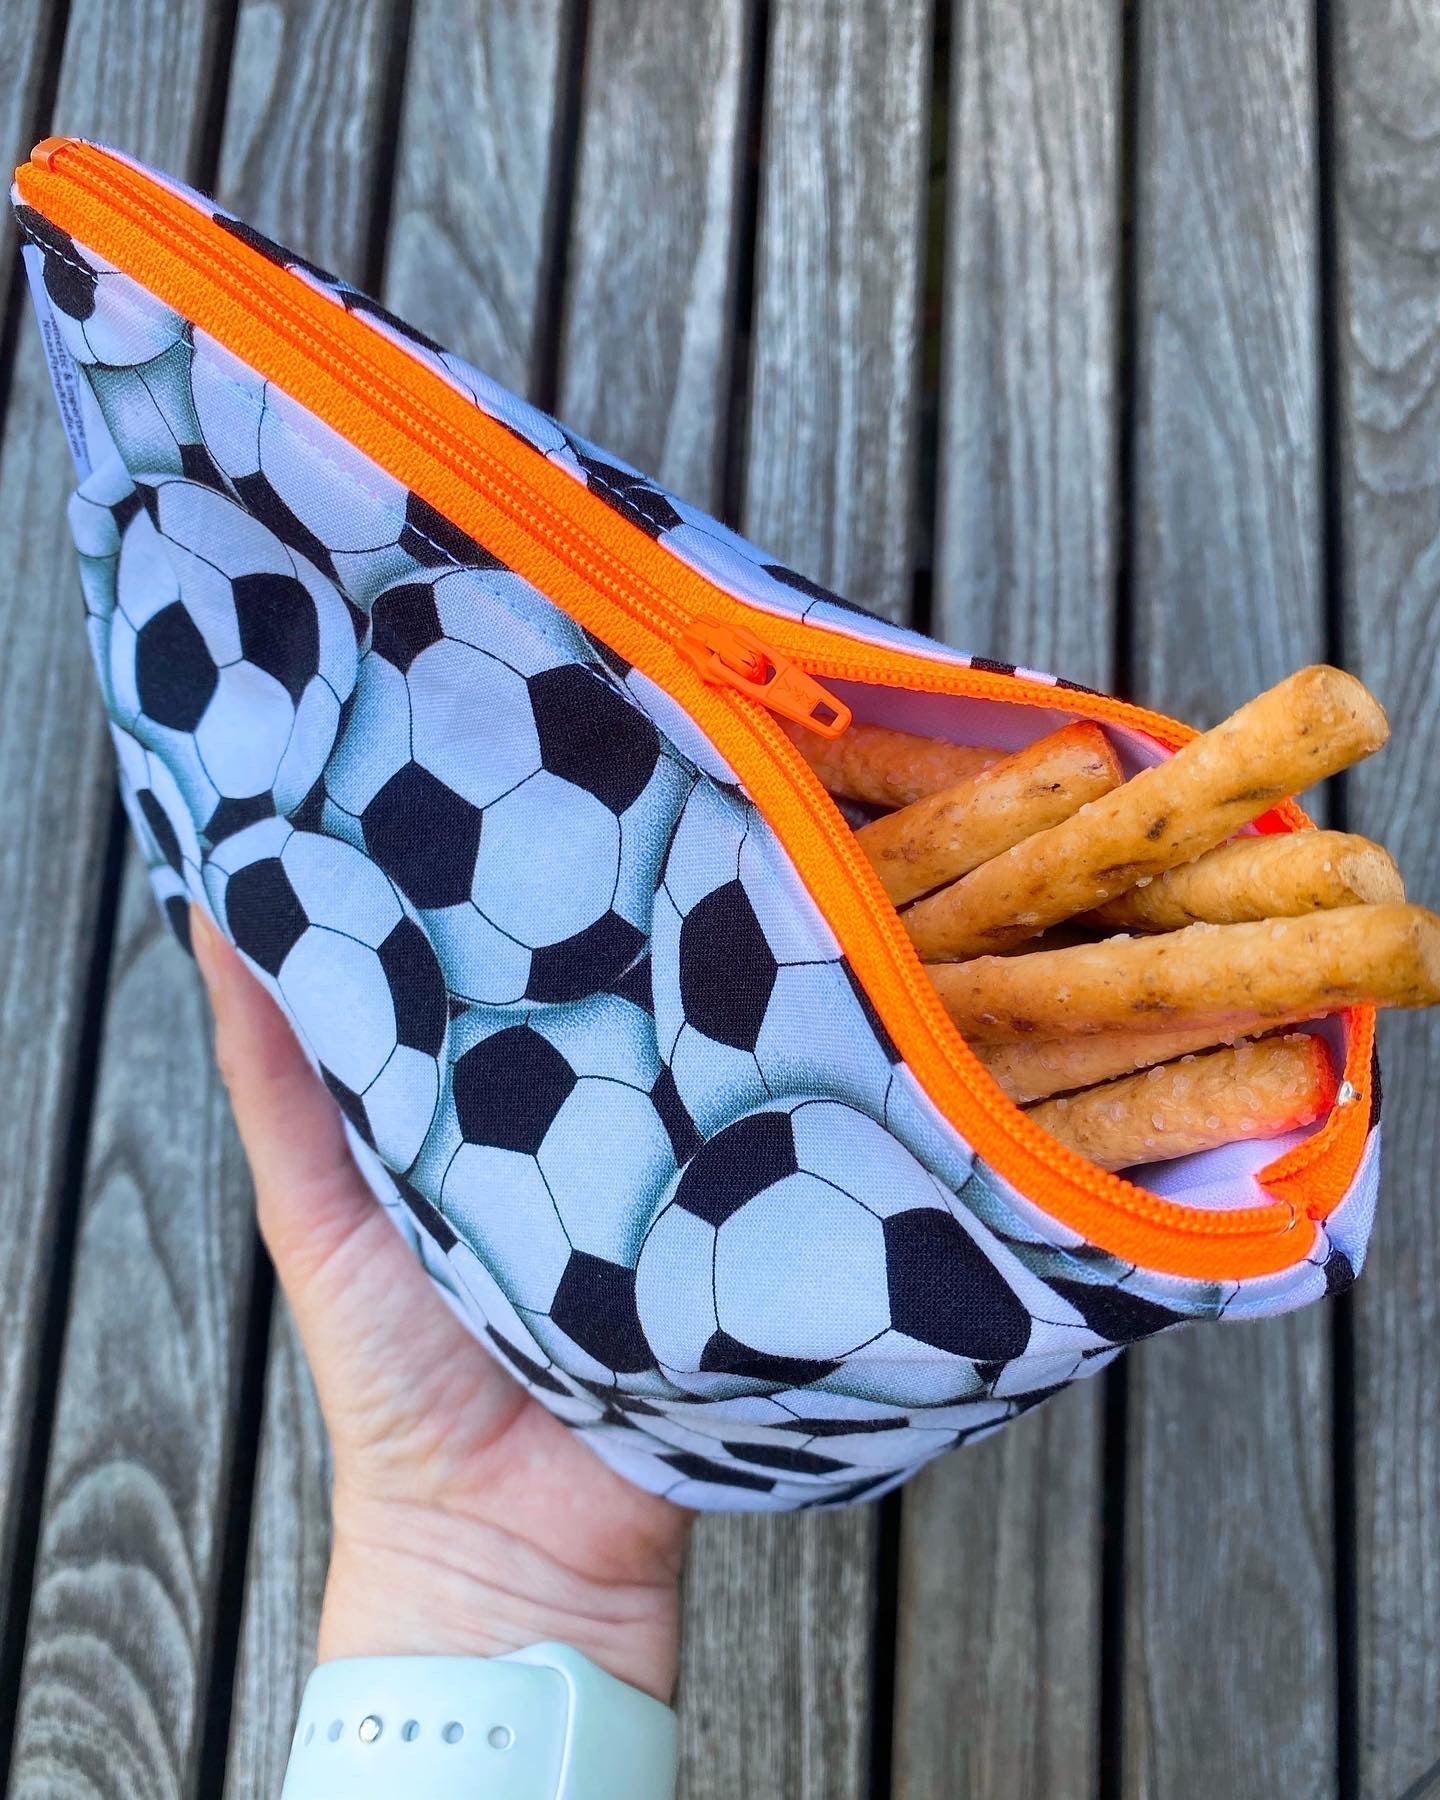 Knick Knack Sized Reusable Zippered Bag Pumpkins